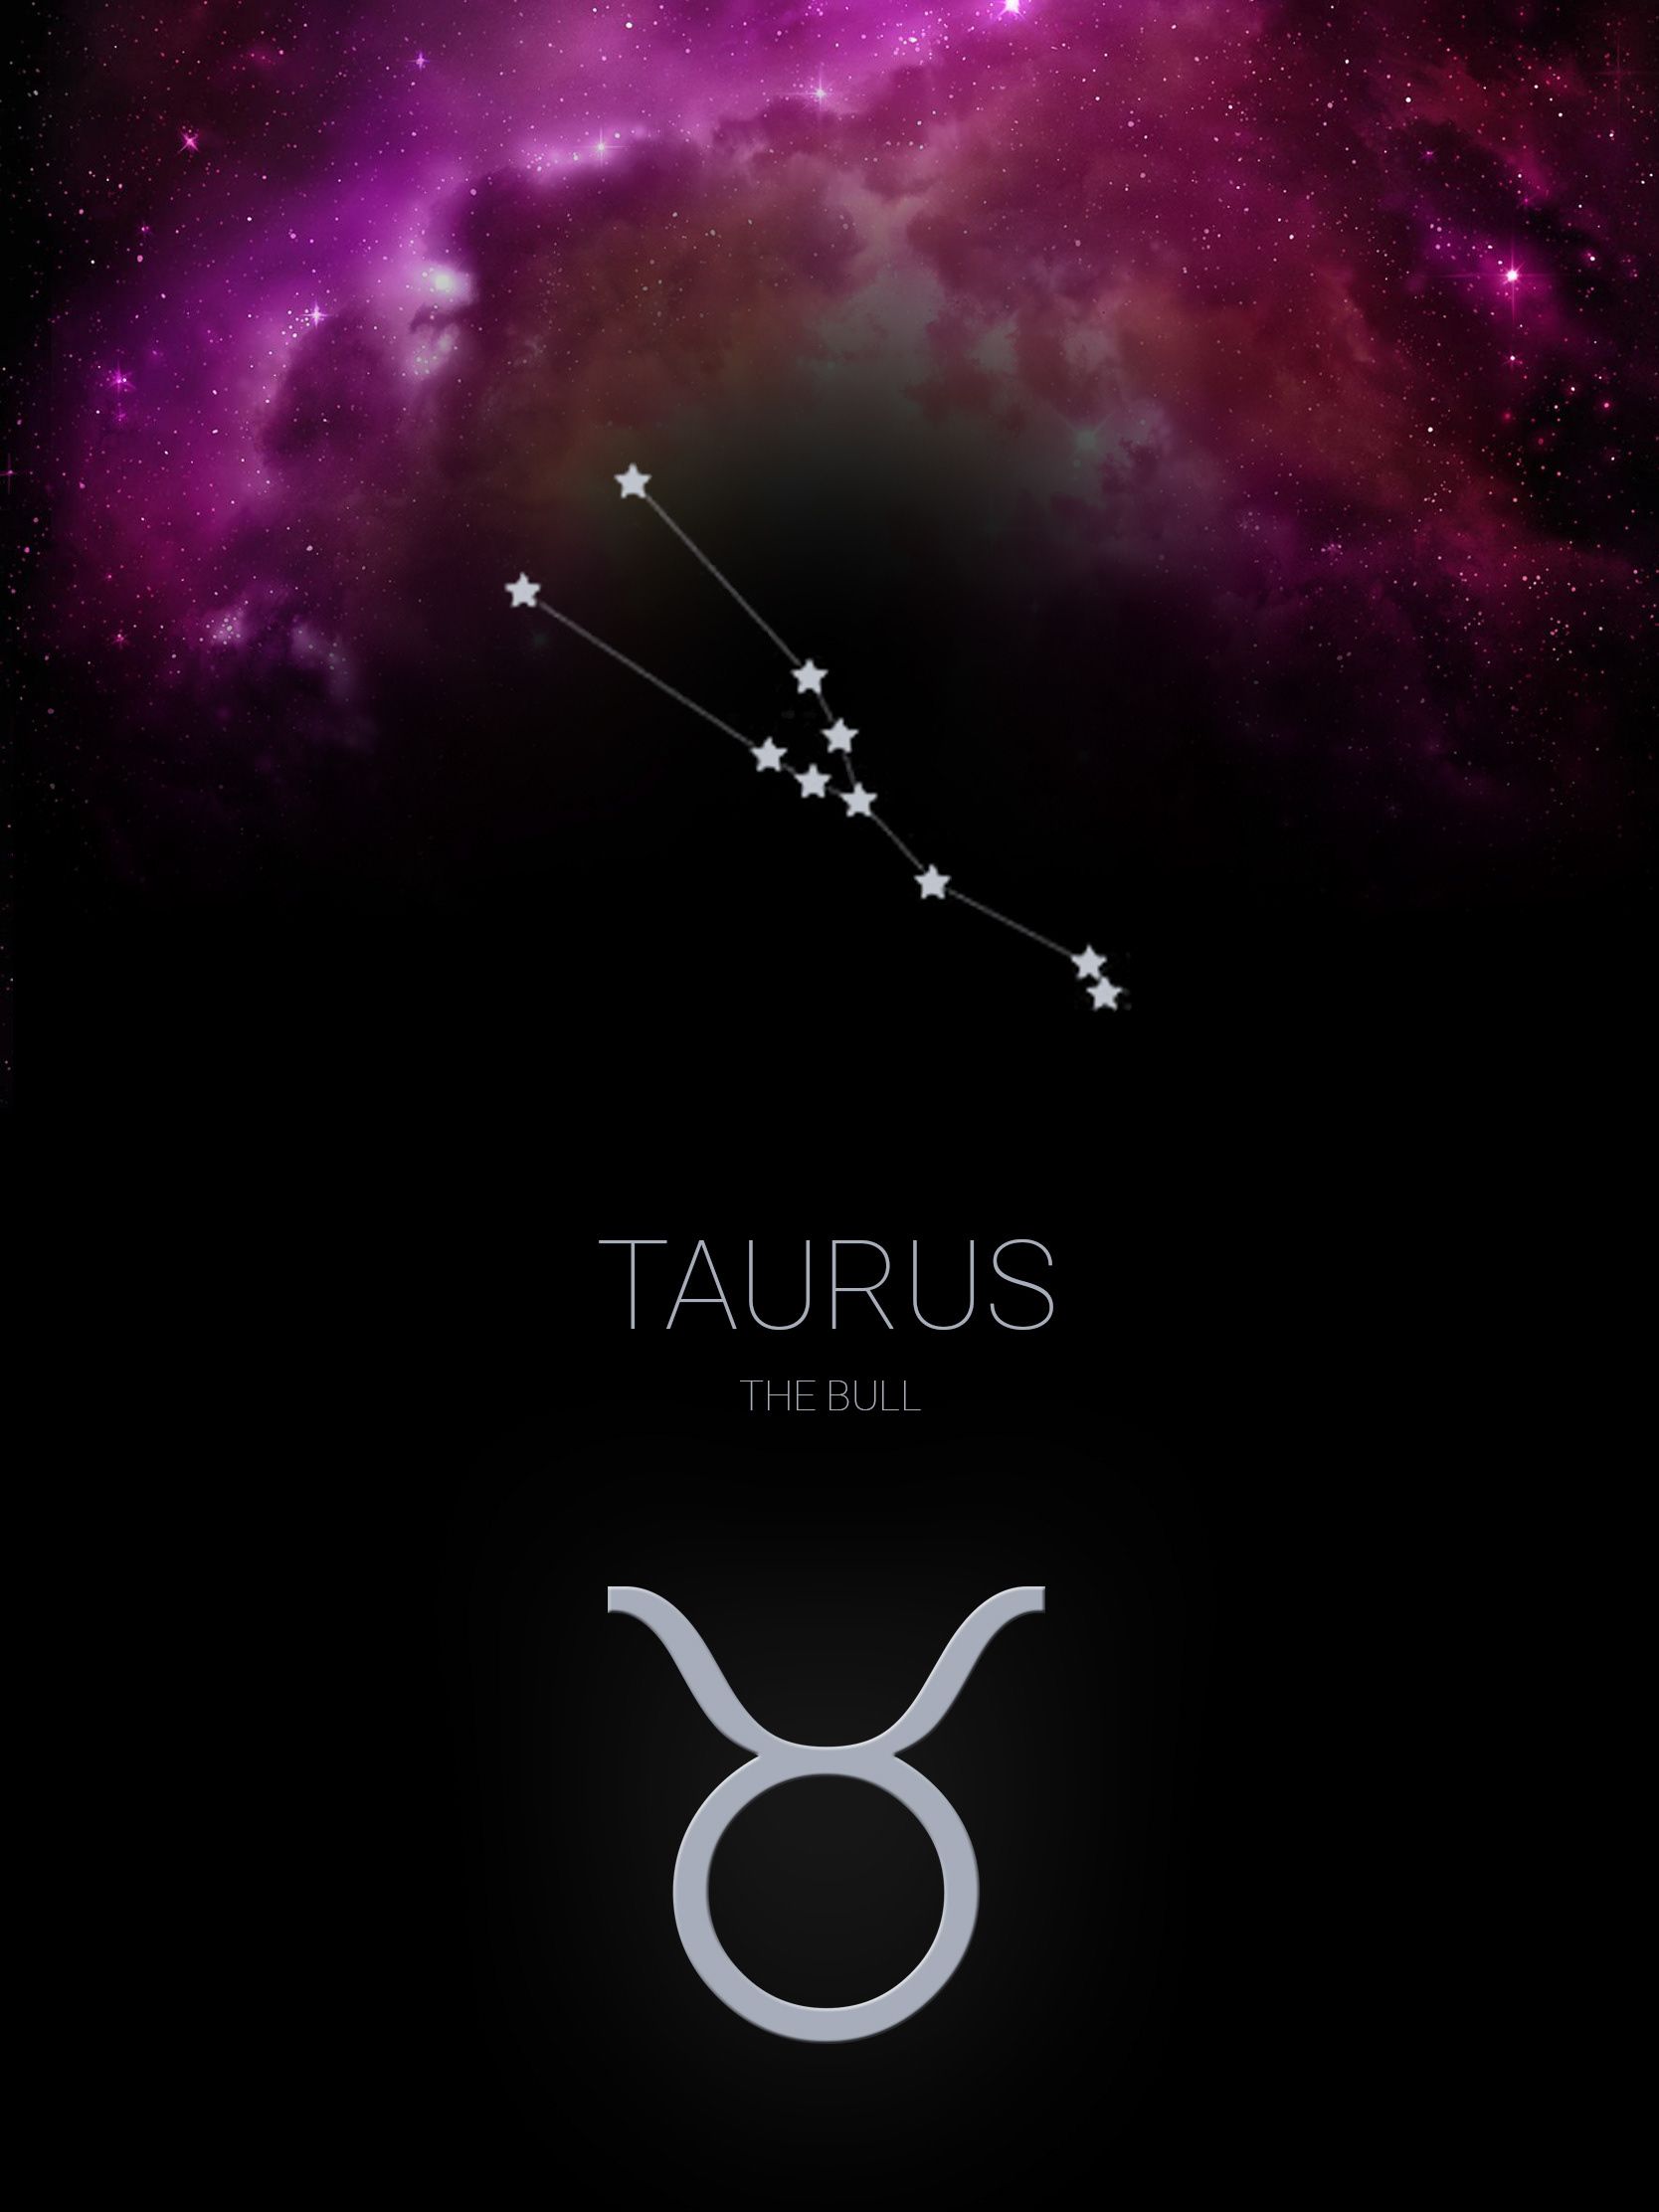 Taurus Zodiac Wallpaper Free Taurus Zodiac Background